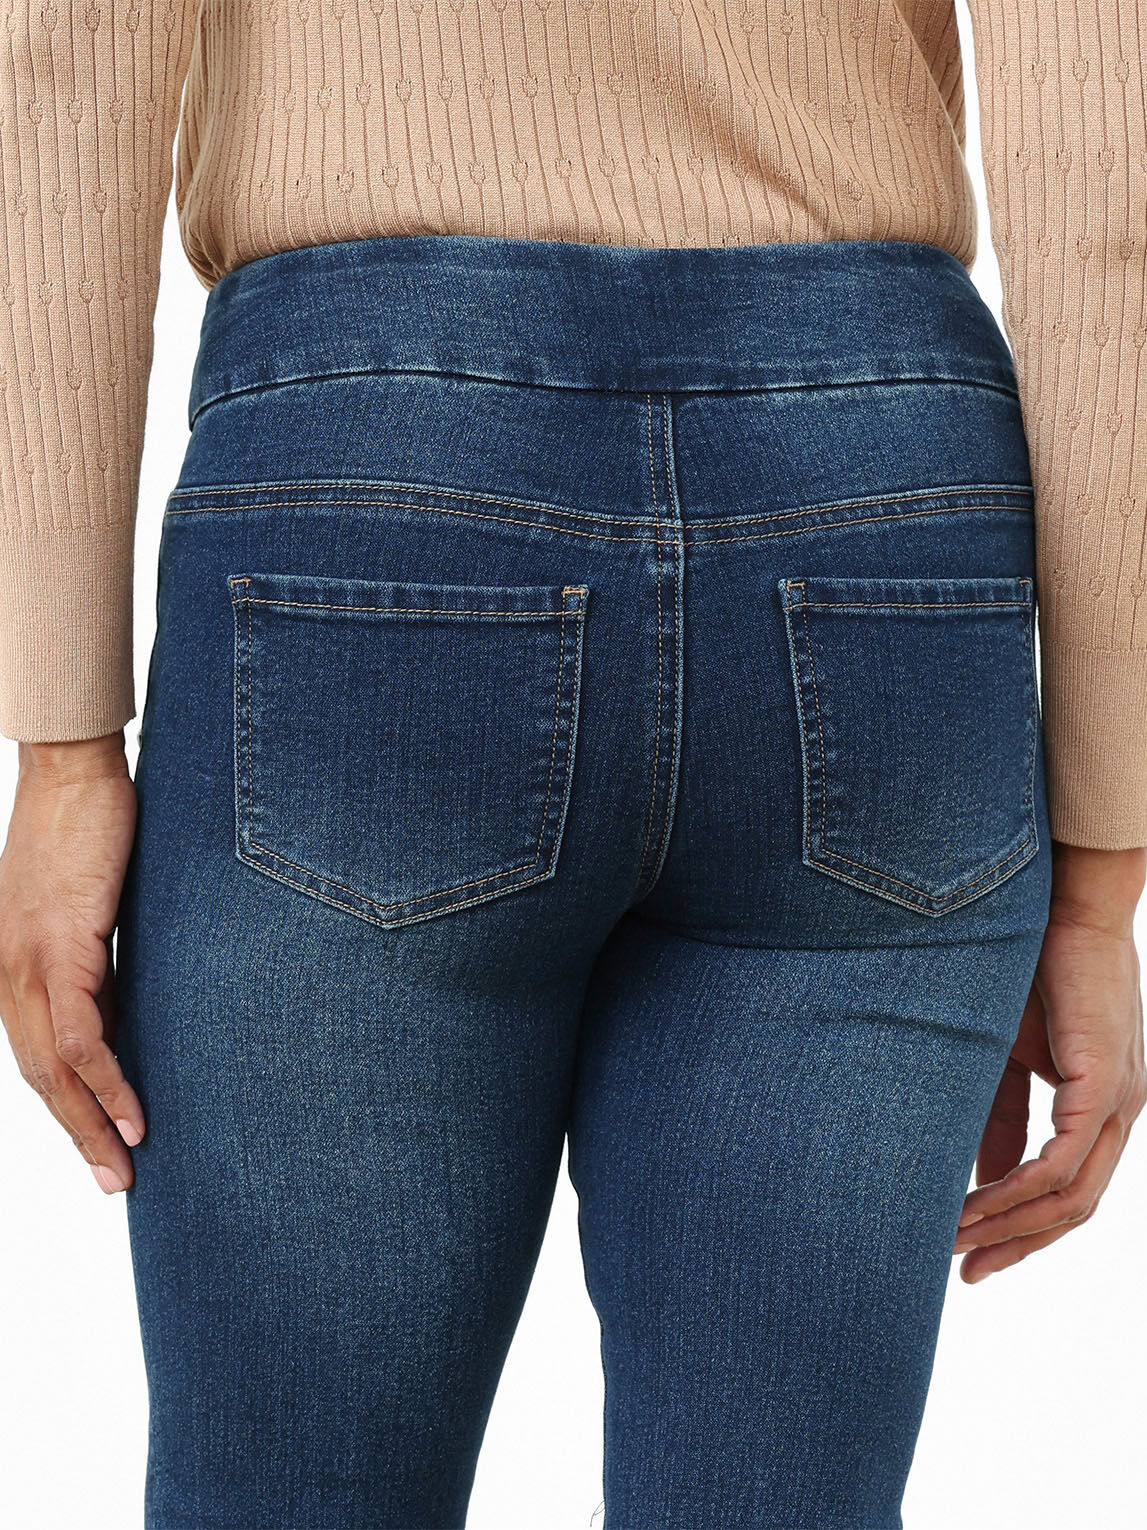 CLEO Dark Wash Slim-Leg Pull-On Jeans by GG